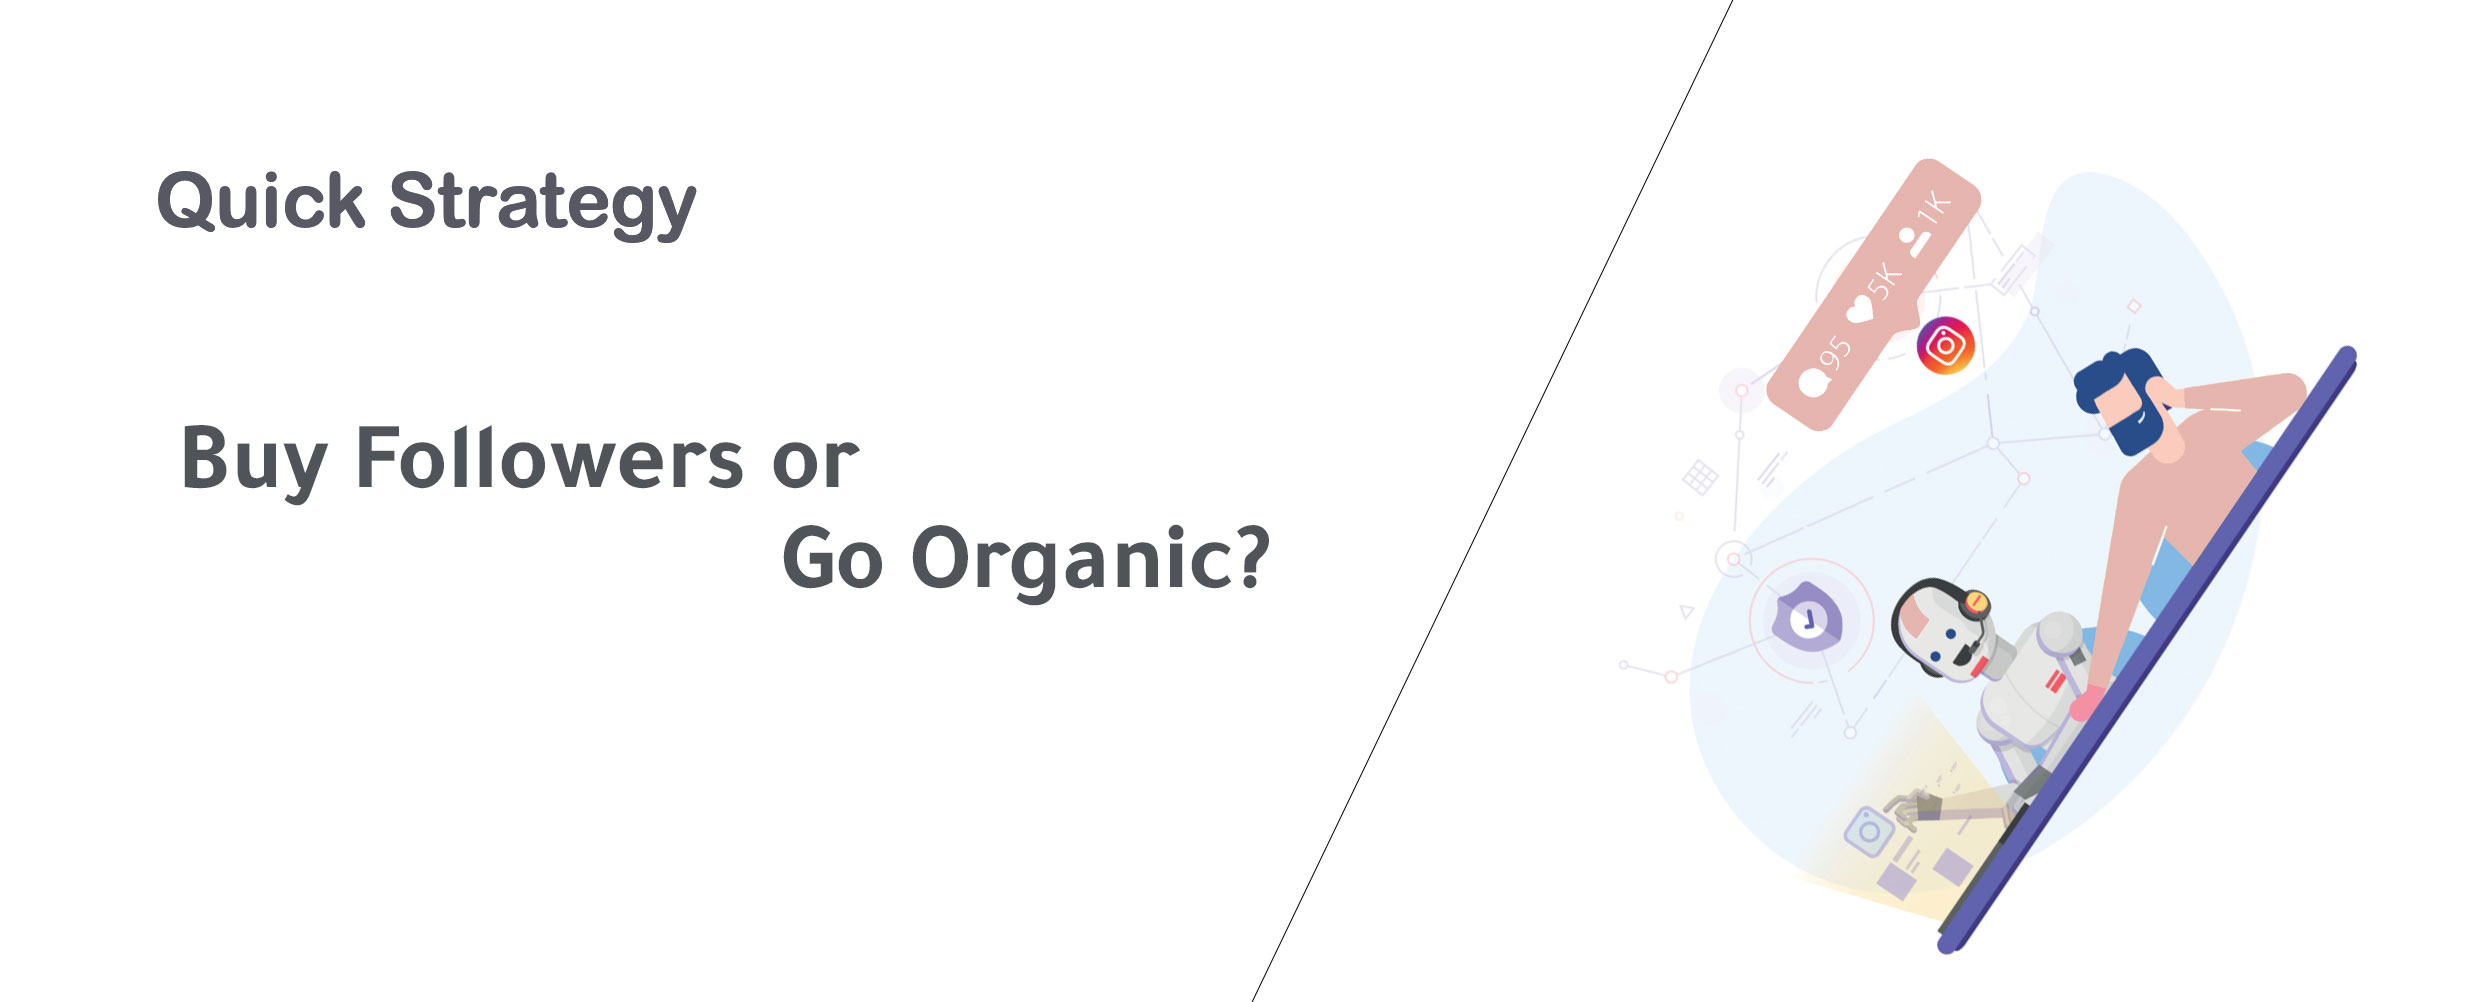 Buy Followers or Go Organic?